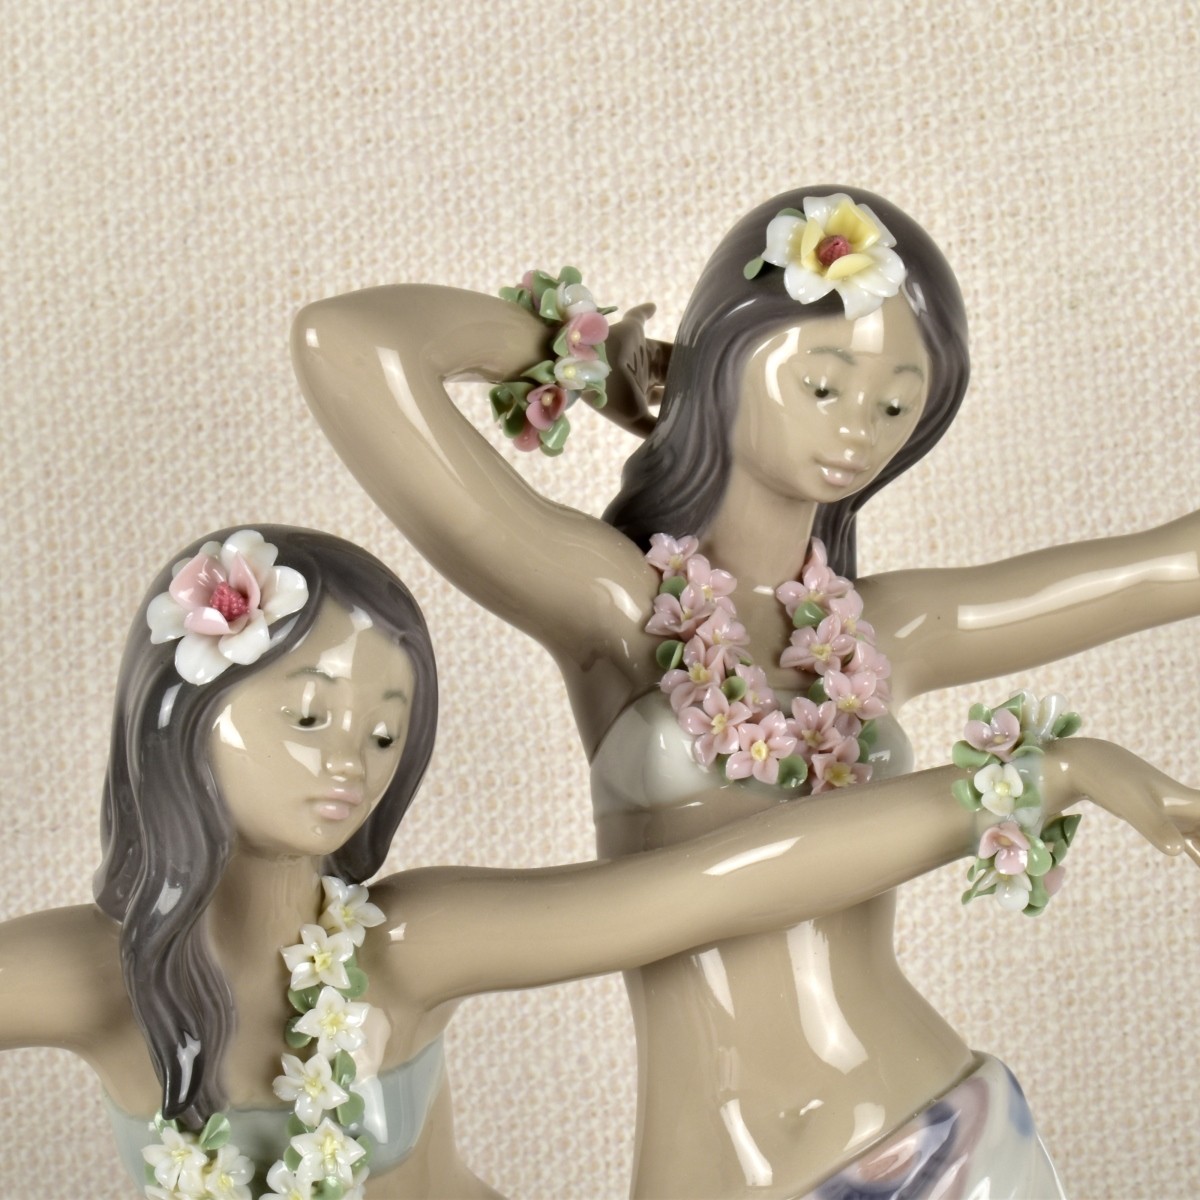 Lladro Figurine of Polynesian Dancers